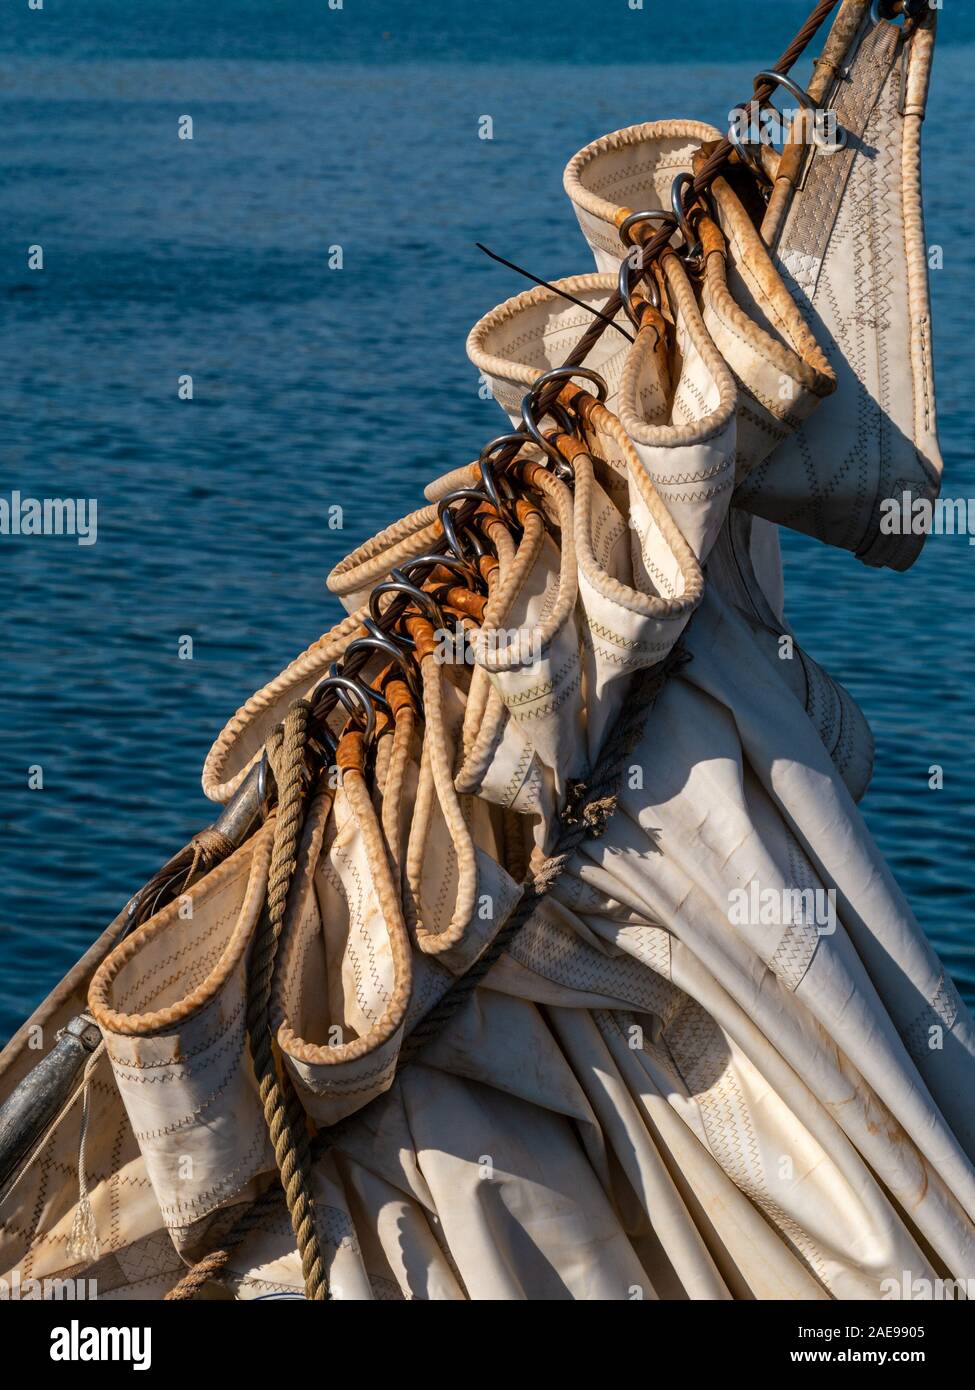 Closeup of gathered jib headsail on Flying Dutchman schooner, a traditional tall sailing ship, Colonsay, Scotland, UK Stock Photo